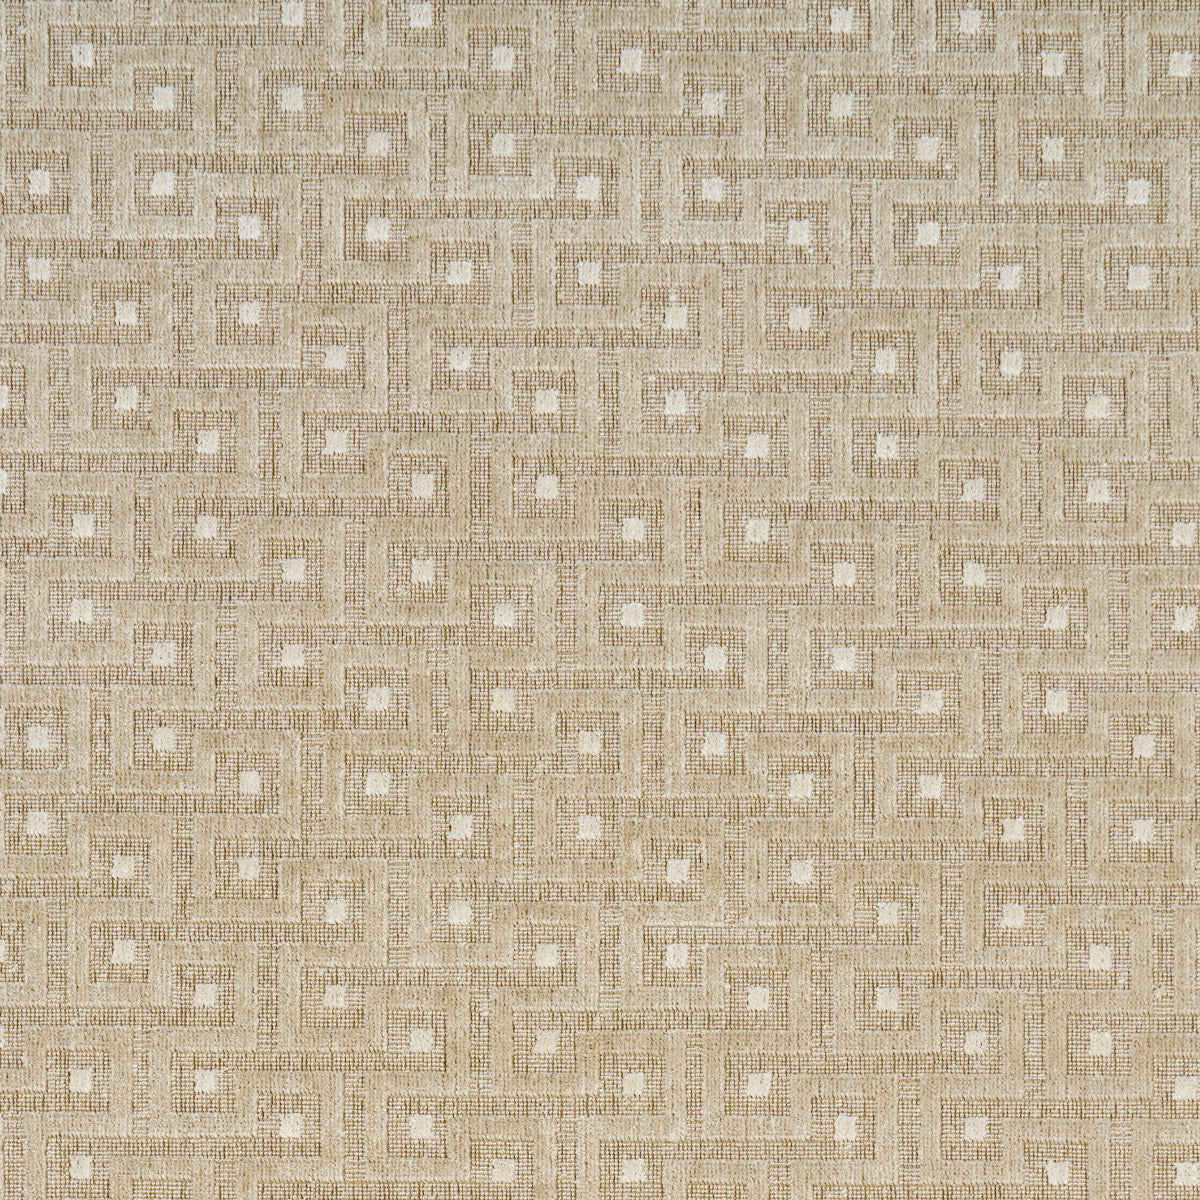 Purchase 83290 | Lalano Linen Velvet, Natural - Schumacher Fabric